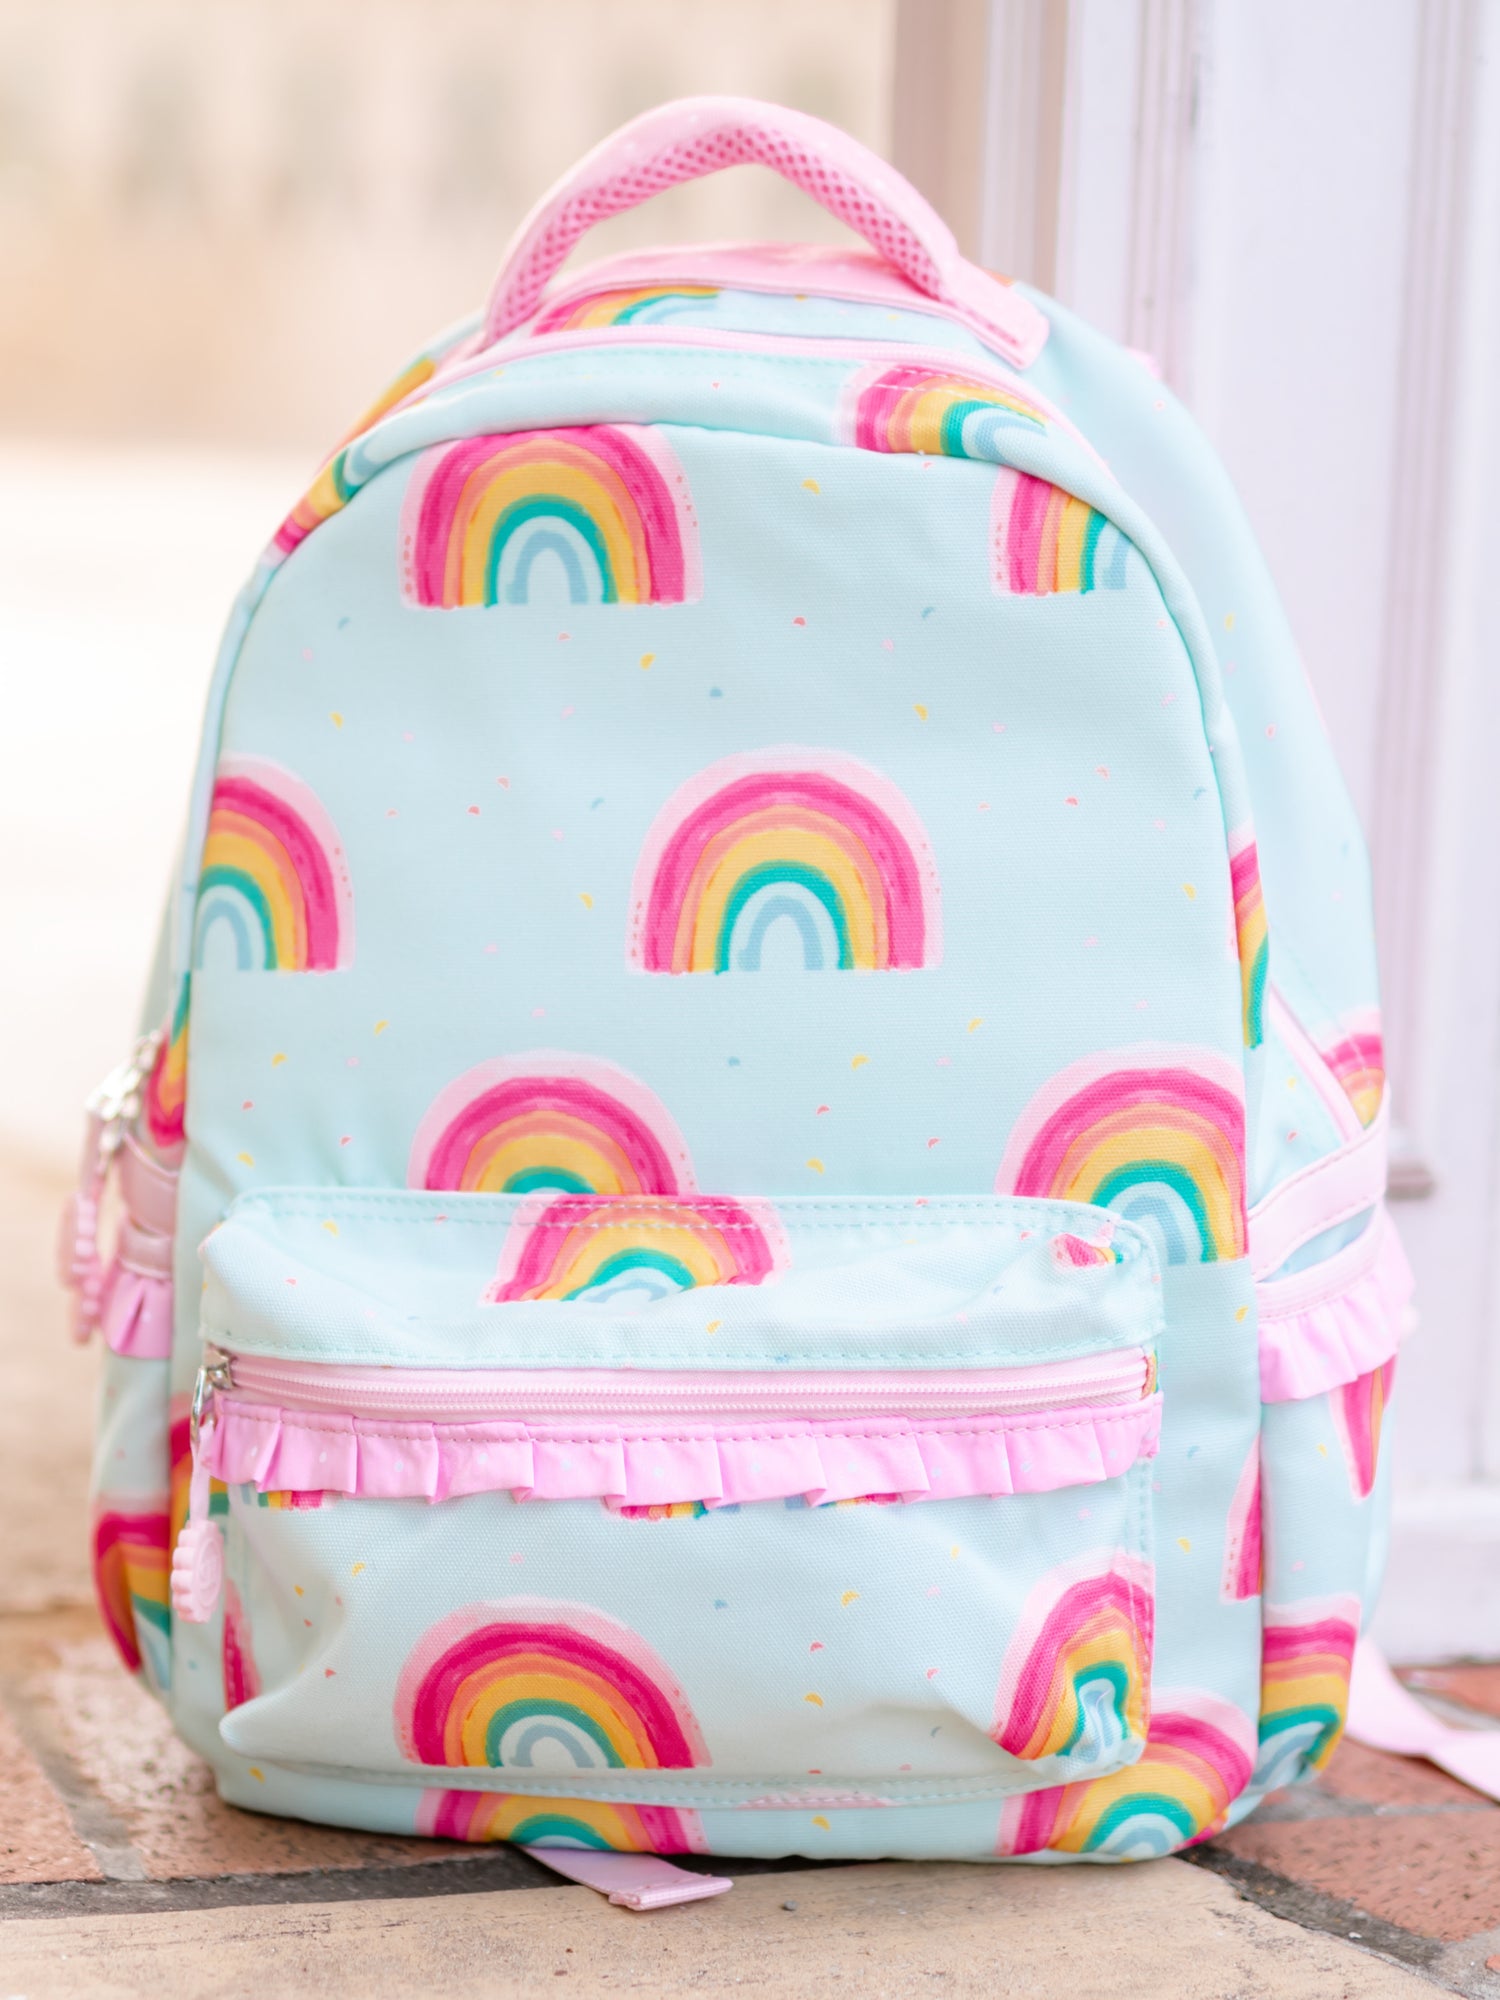 New Under One Sky Rainbow Unicorn Backpack